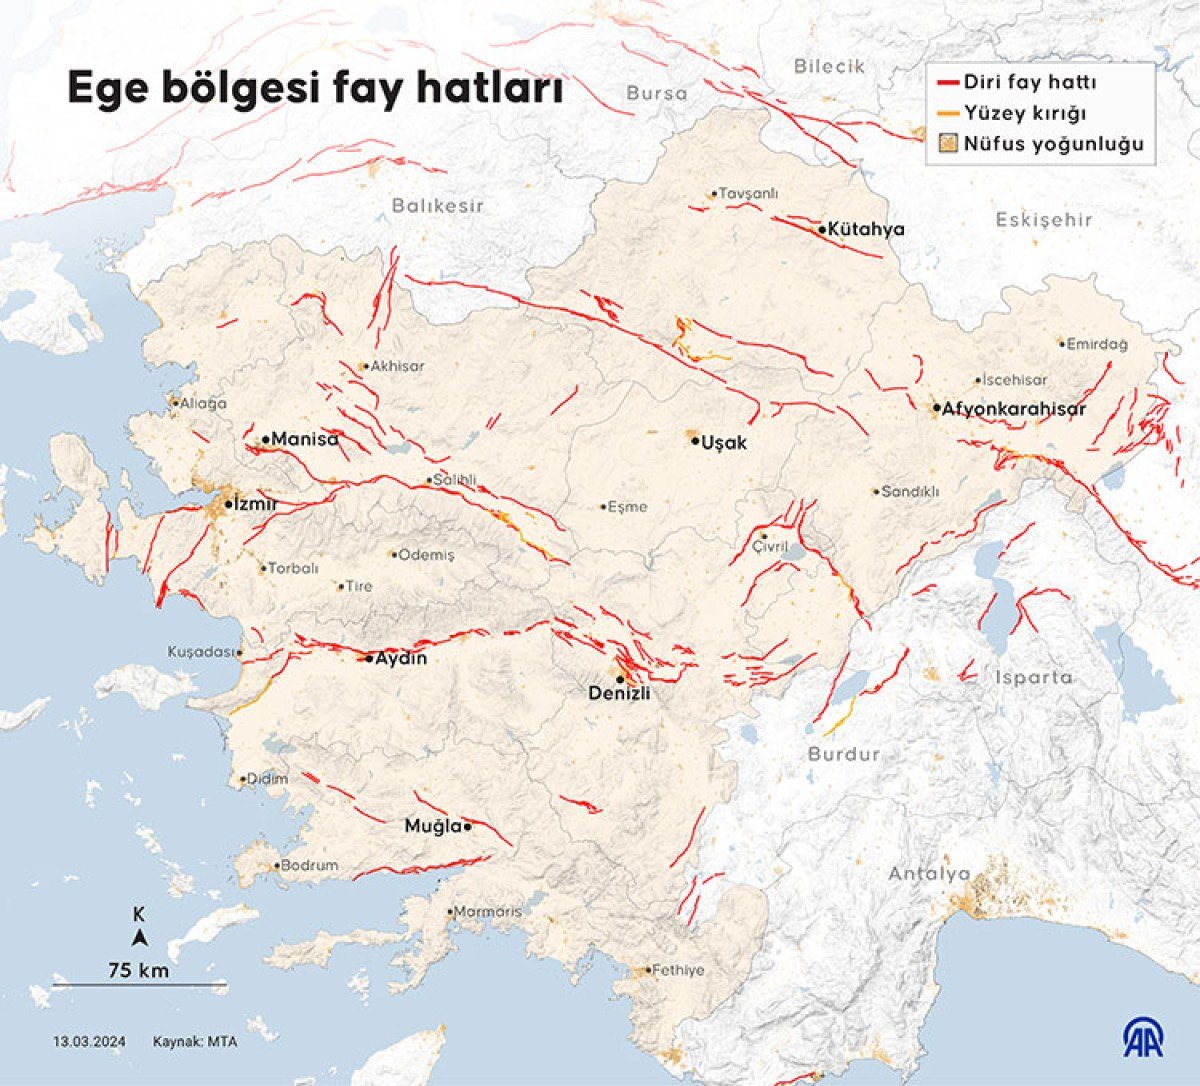 turkiyede deprem riski mta diri fay hatti haritasini guncelledi 2 IHcj1KRC